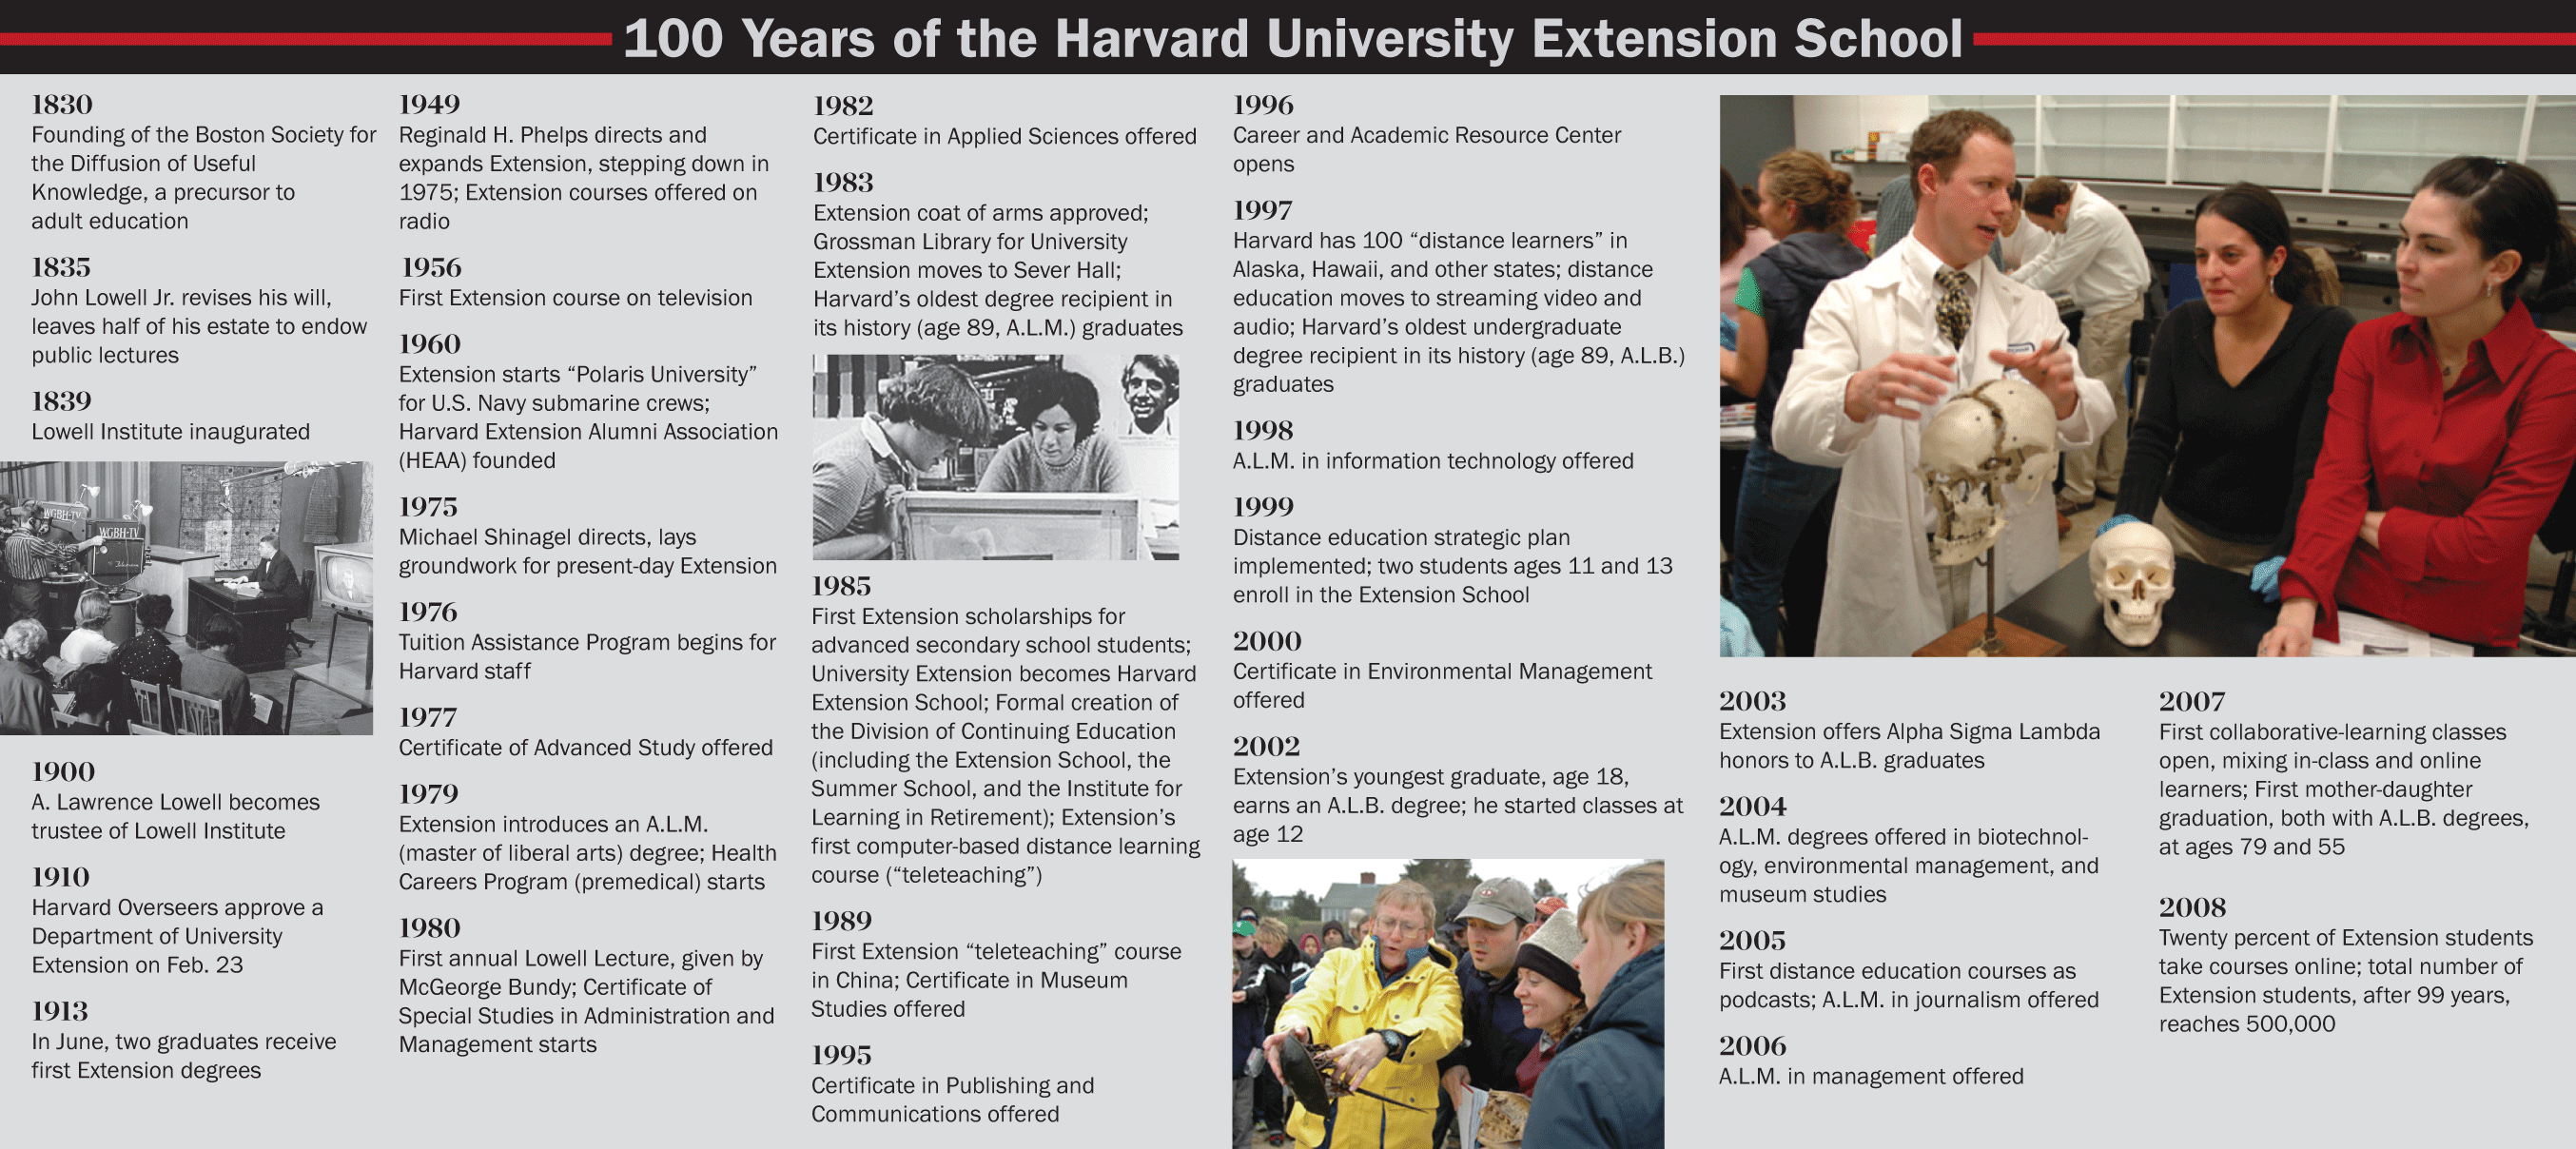 100 Years of the Harvard University Extension School